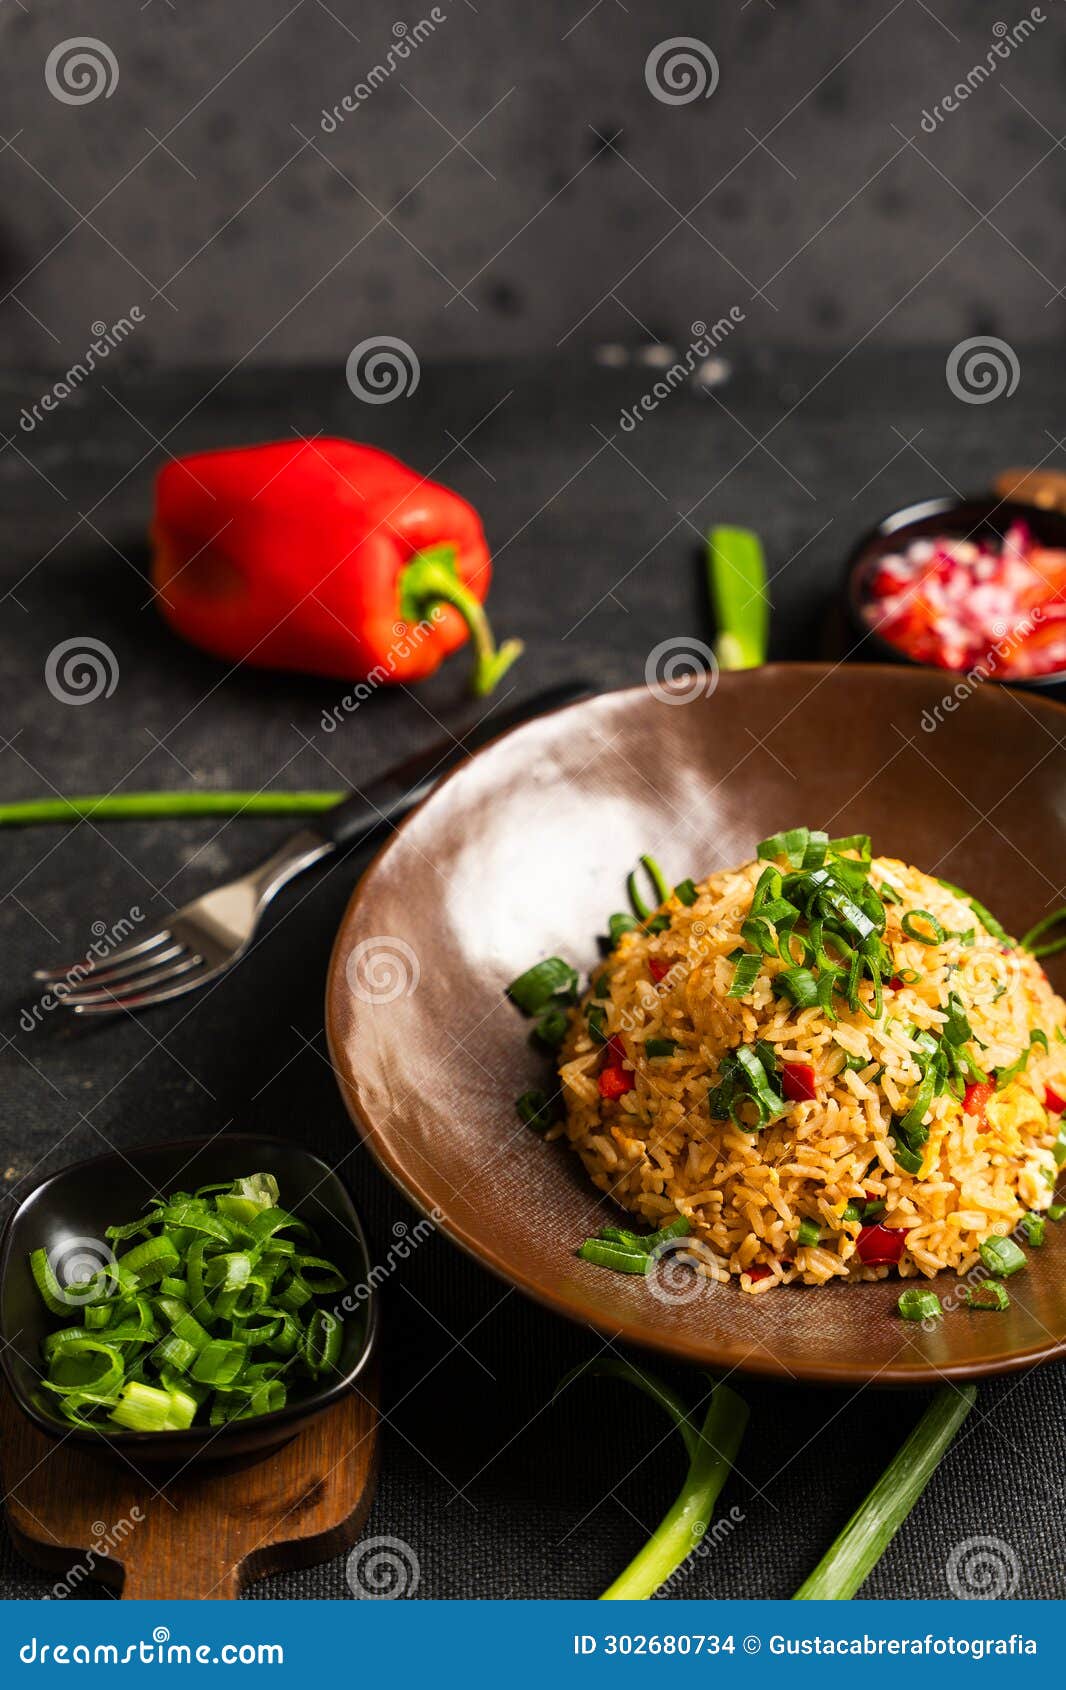 colorful dish of peruvian gastronomy called arroz chaufa.